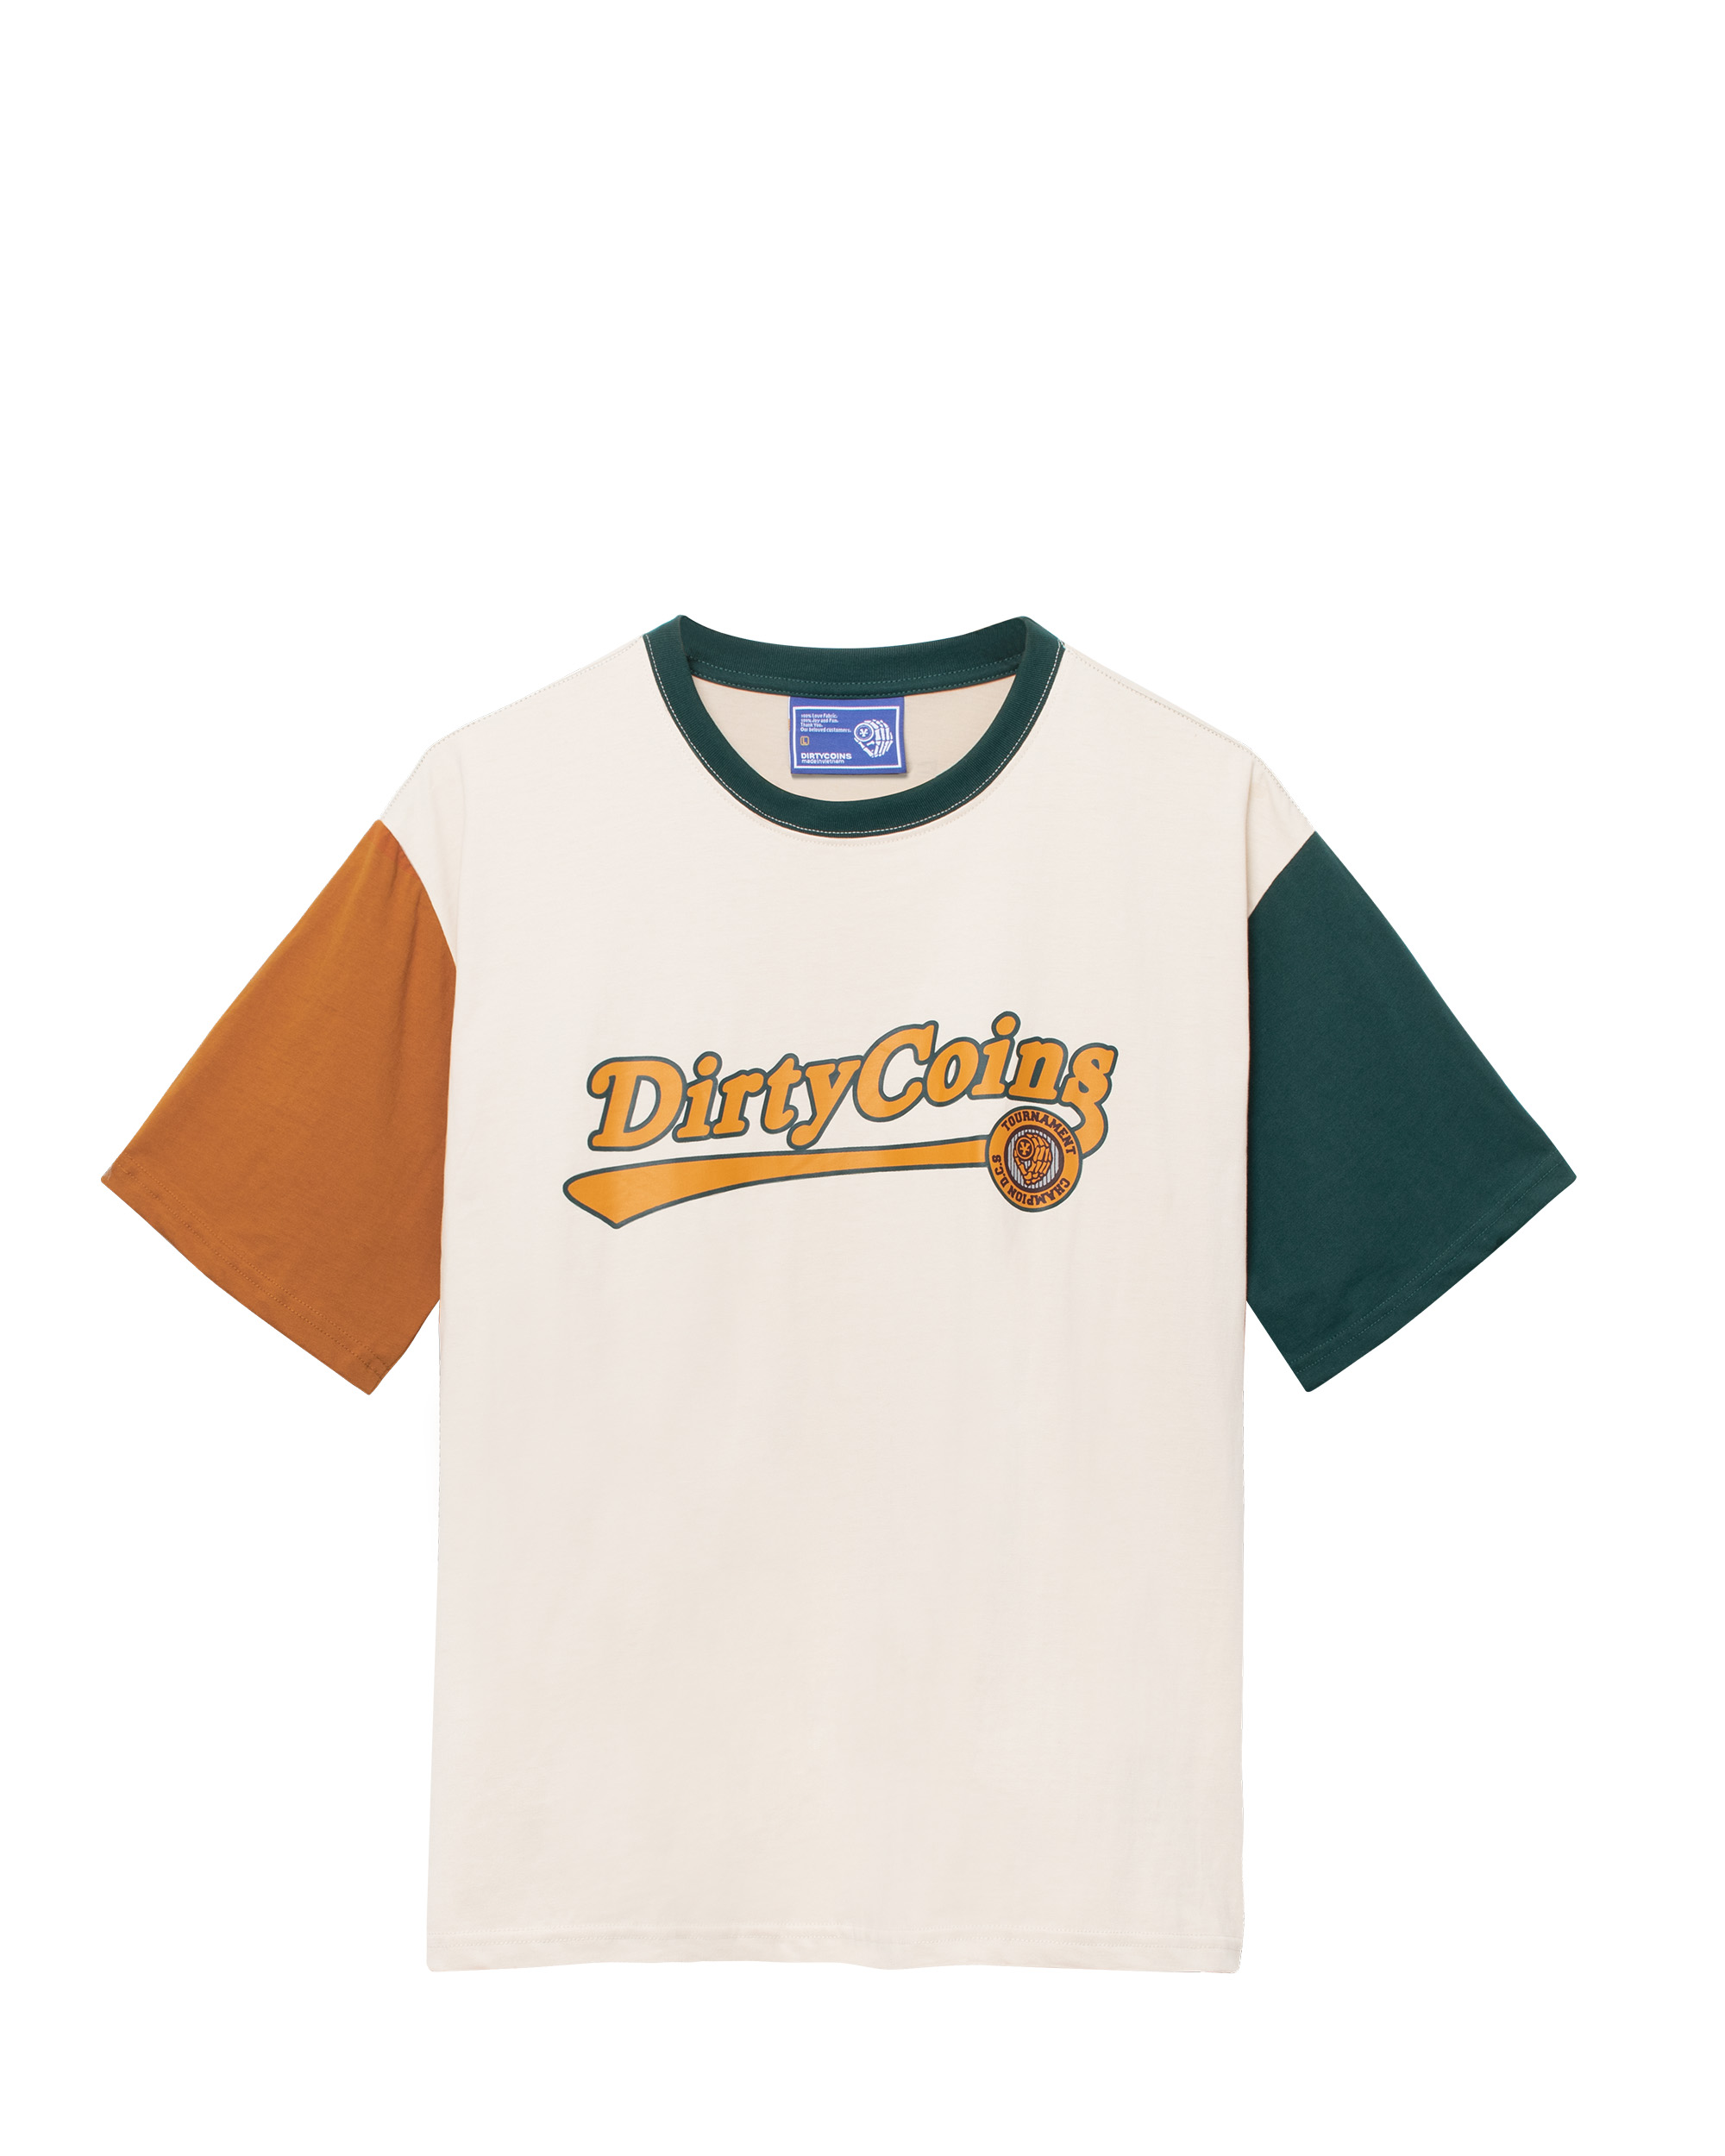 DirtyCoins Retro T-Shirt